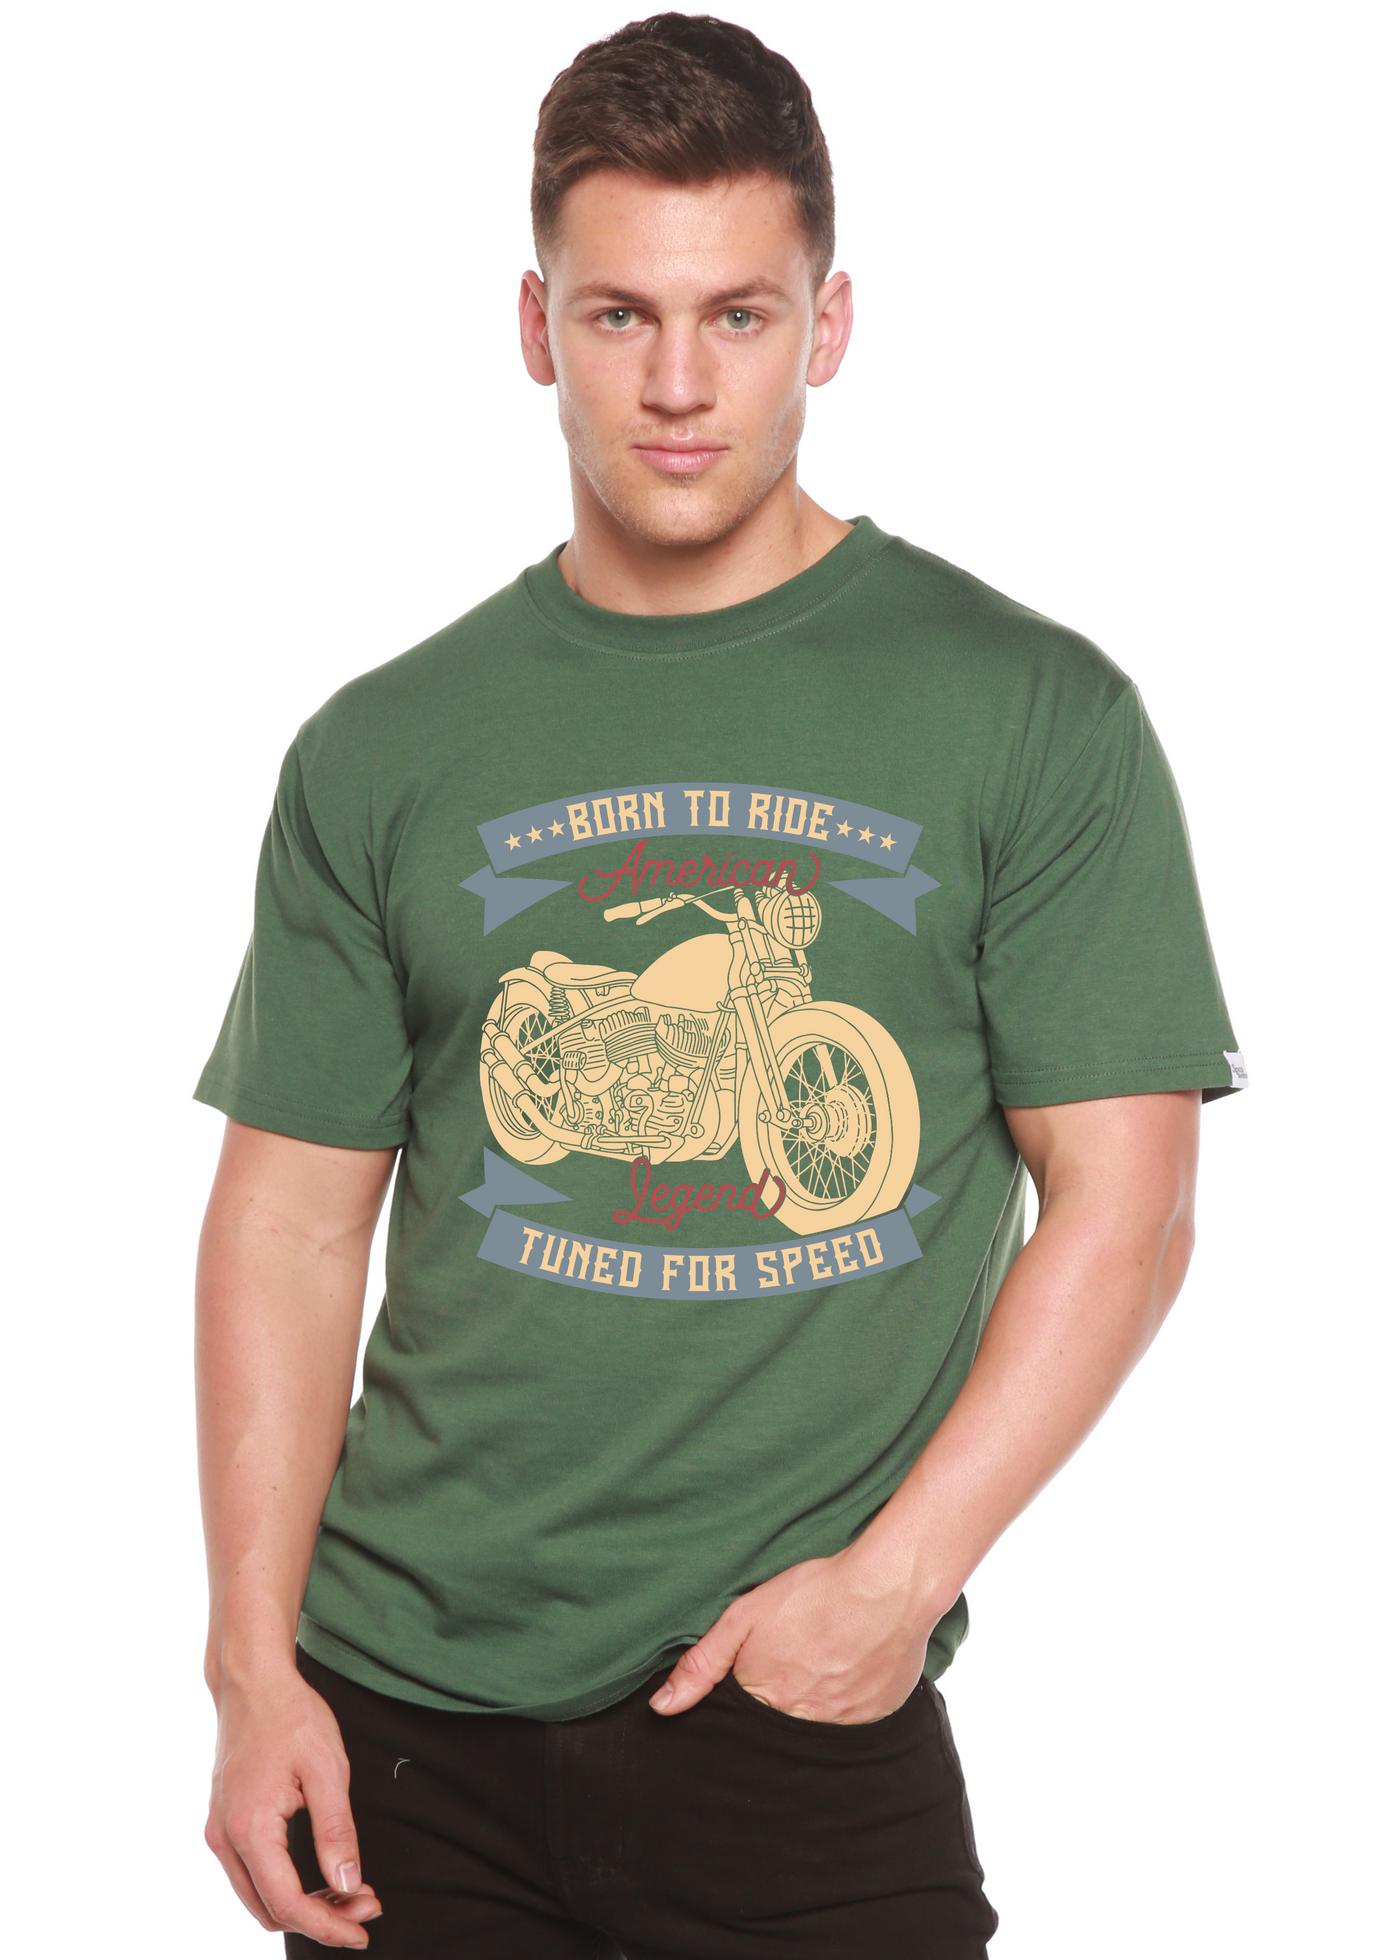 Born To Ride American Legend men's bamboo tshirt pine green